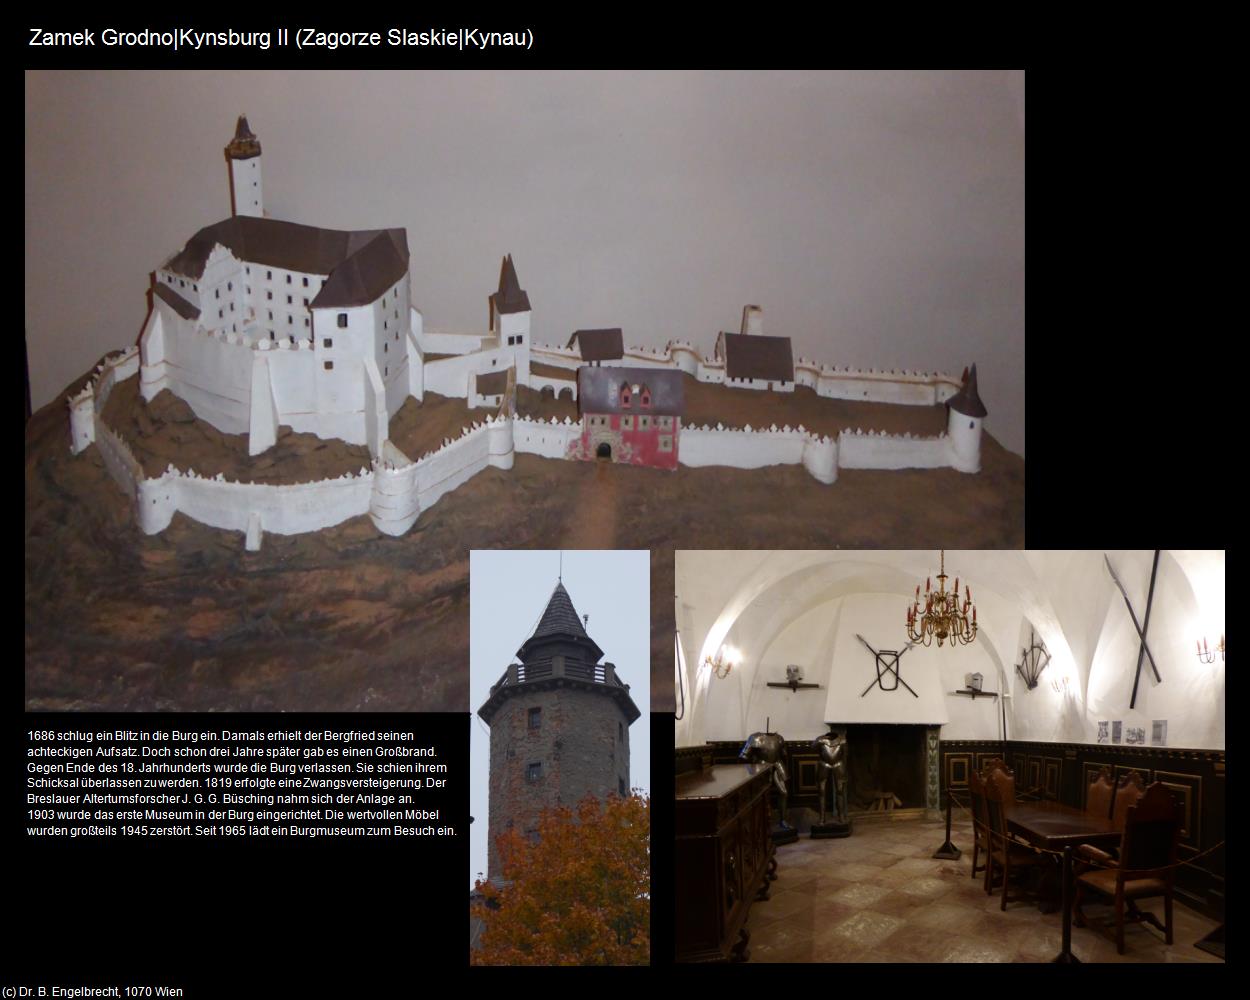 Zamek Grodno|Kynsburg II (Zagorze Slaskie|Kynau) in POLEN-Schlesien